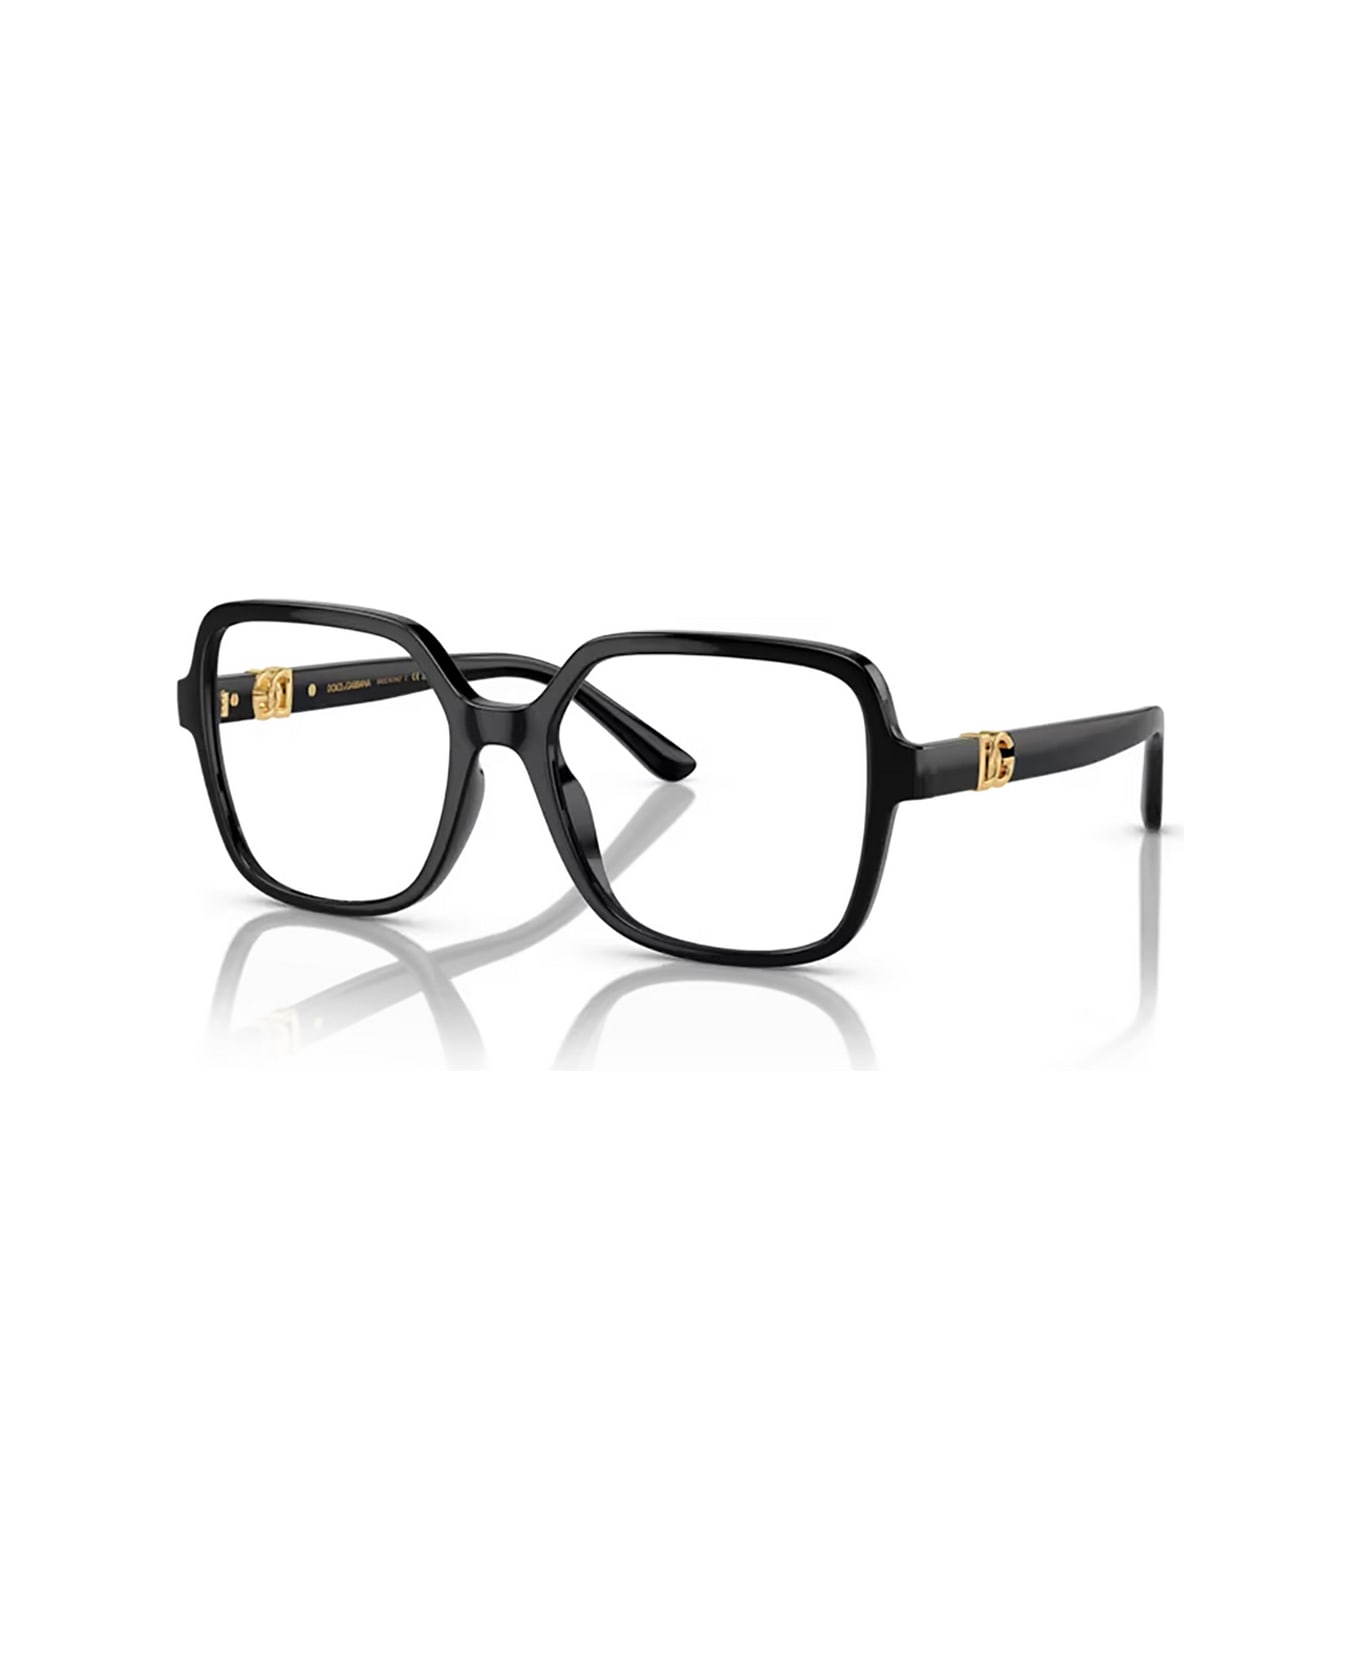 Dolce & Gabbana Eyewear Dg5105u 501 Glasses - Nero アイウェア